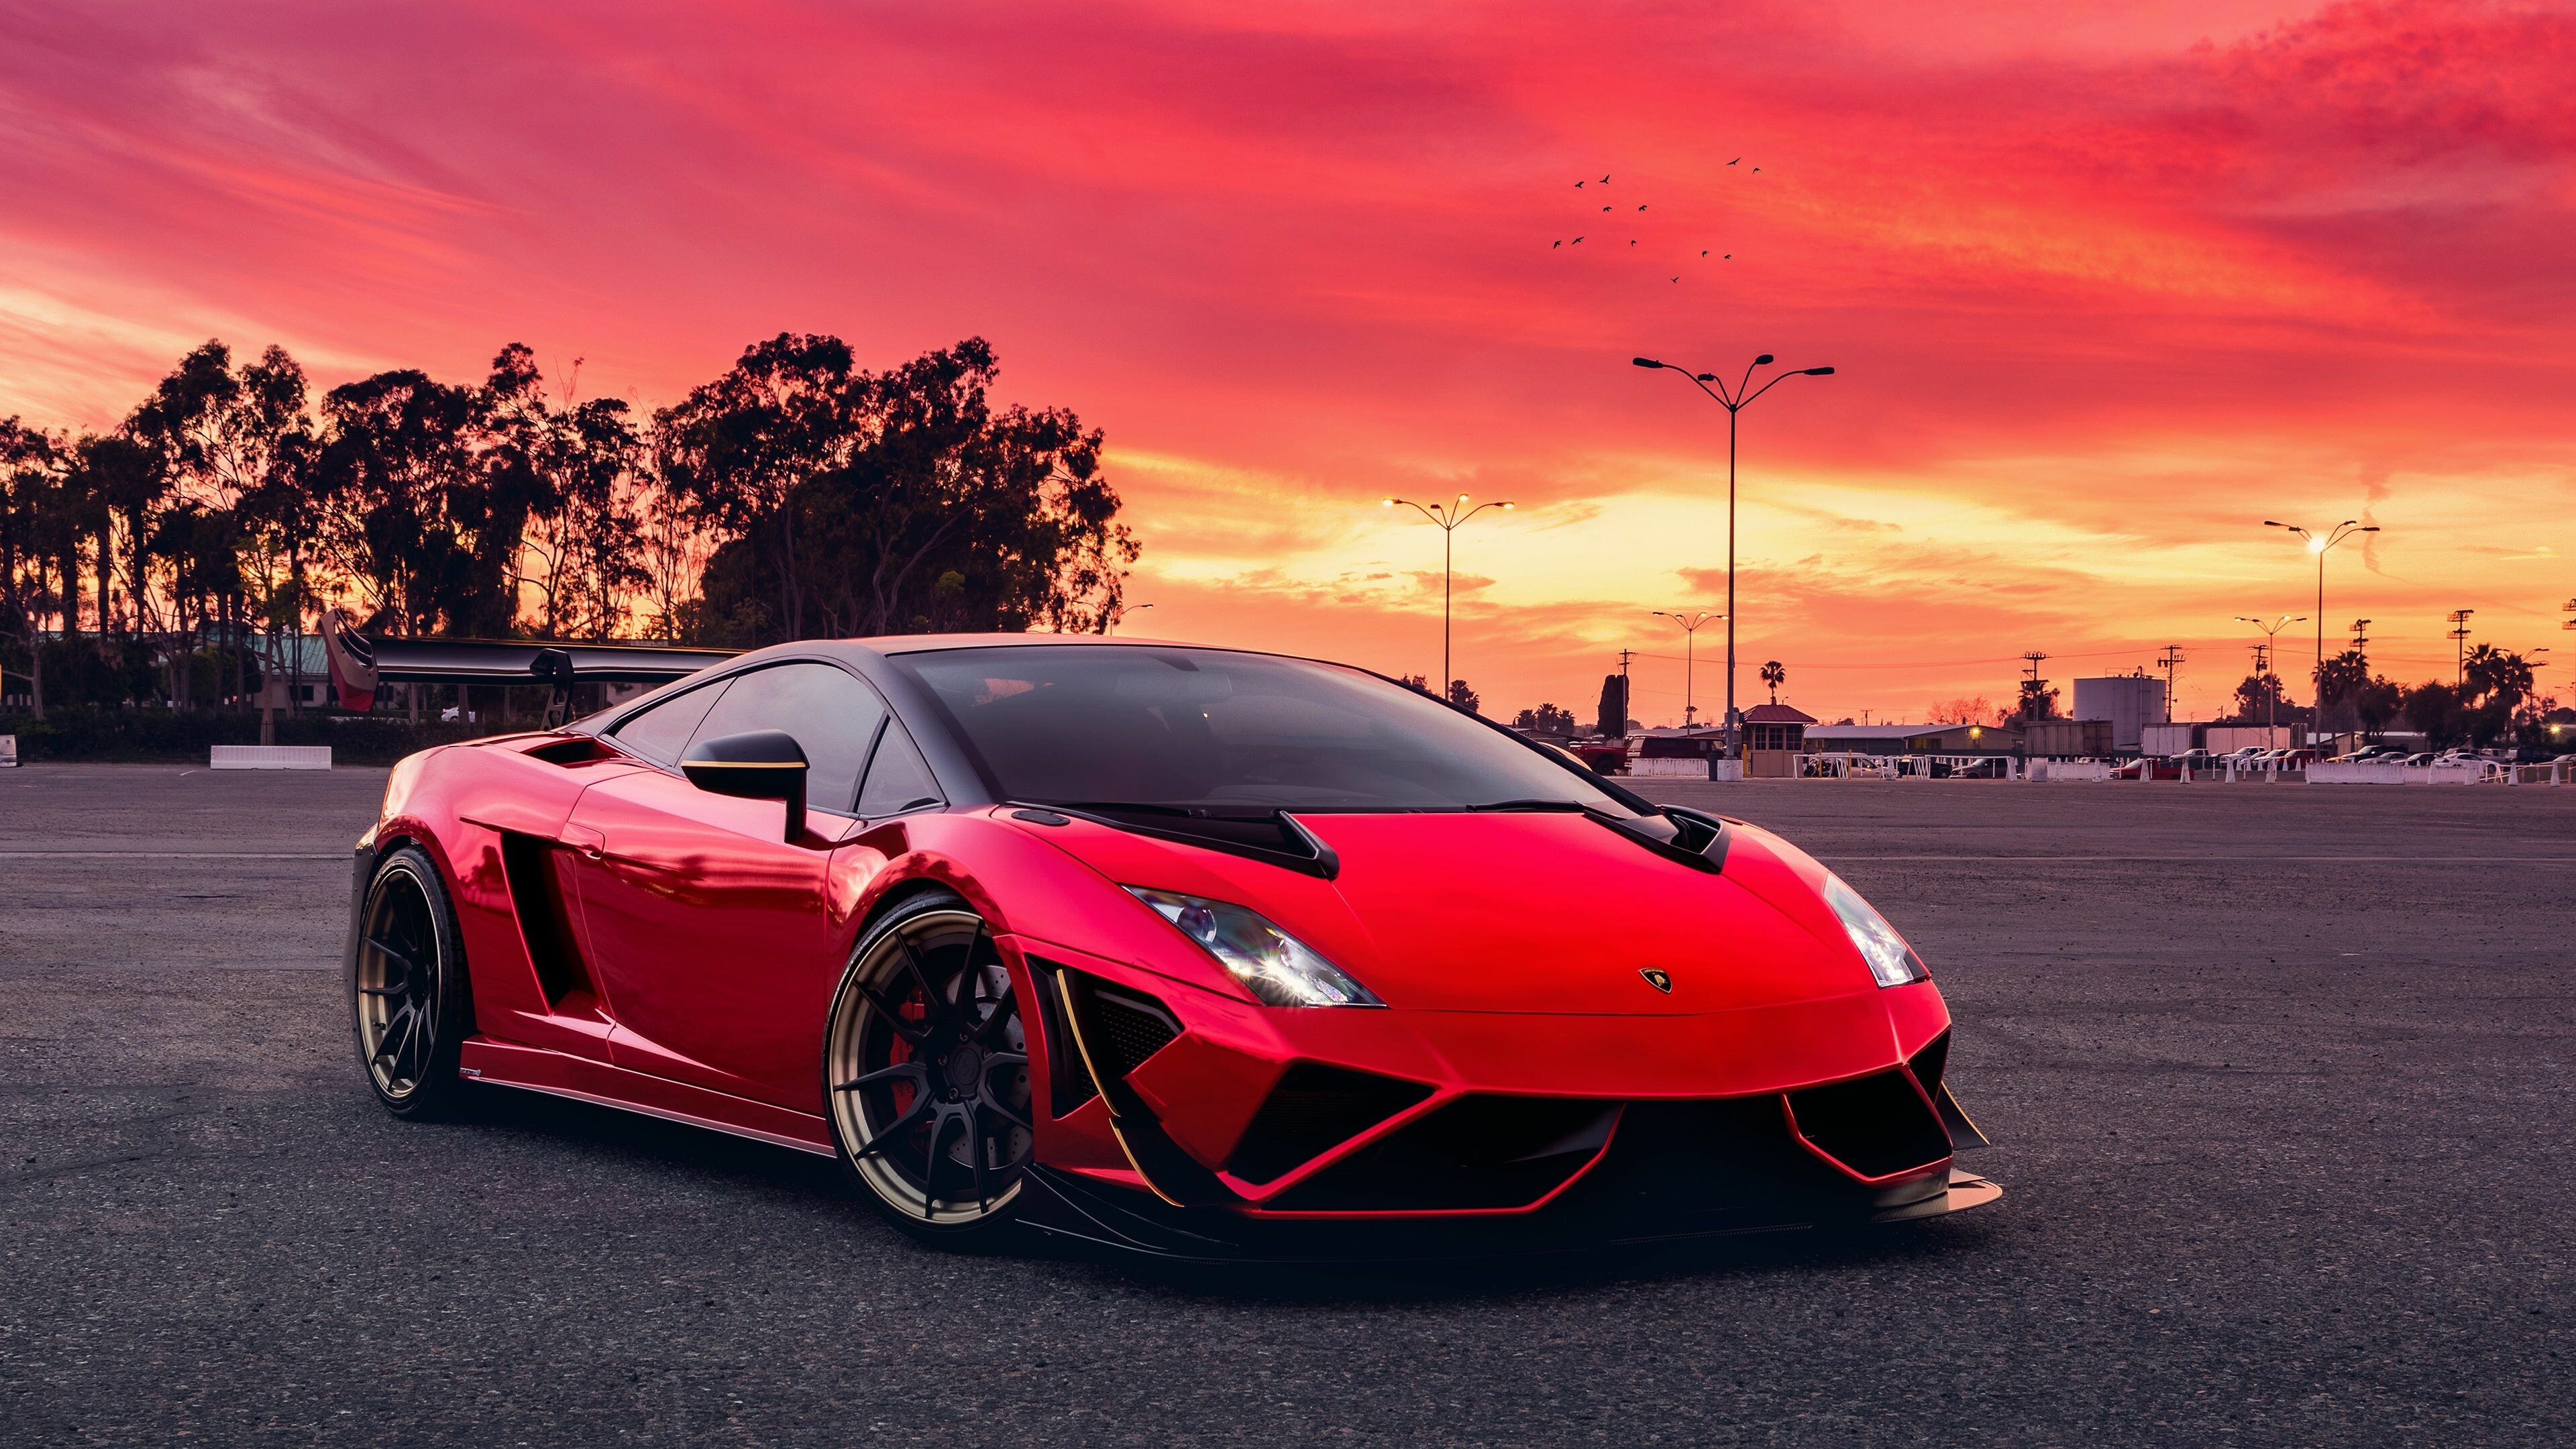 Lamborghini: Gallardo, Supercar, Italian automotive brand. 3840x2160 4K Wallpaper.